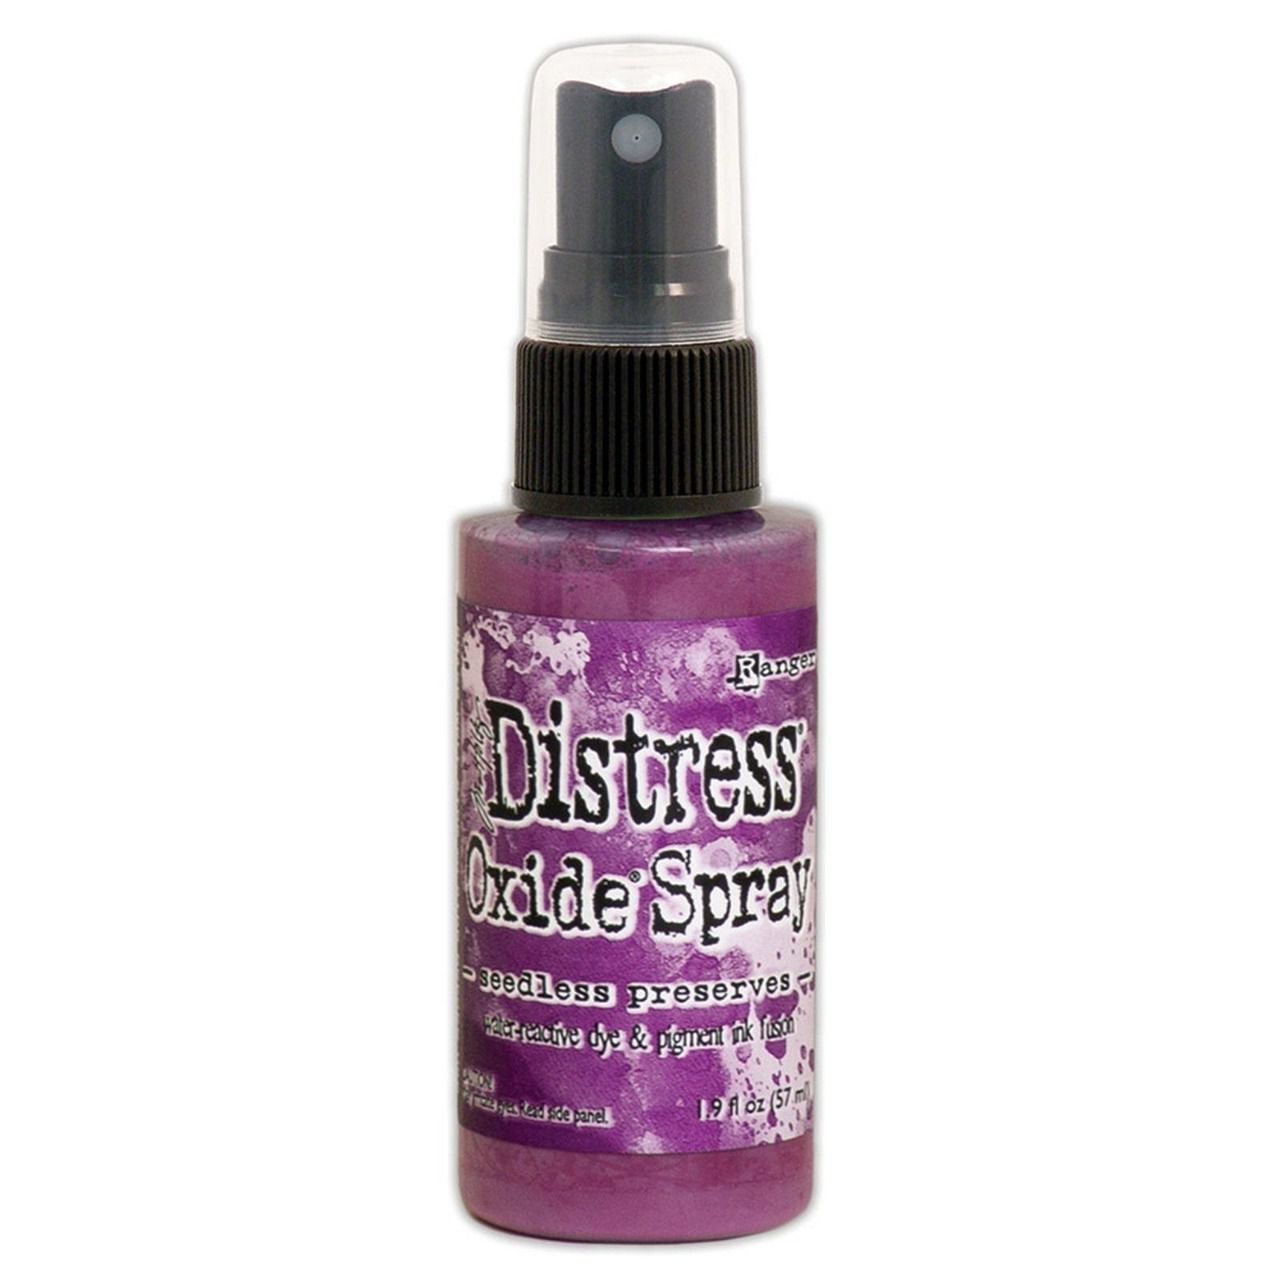 Distress spray oxide : Seedless preserves